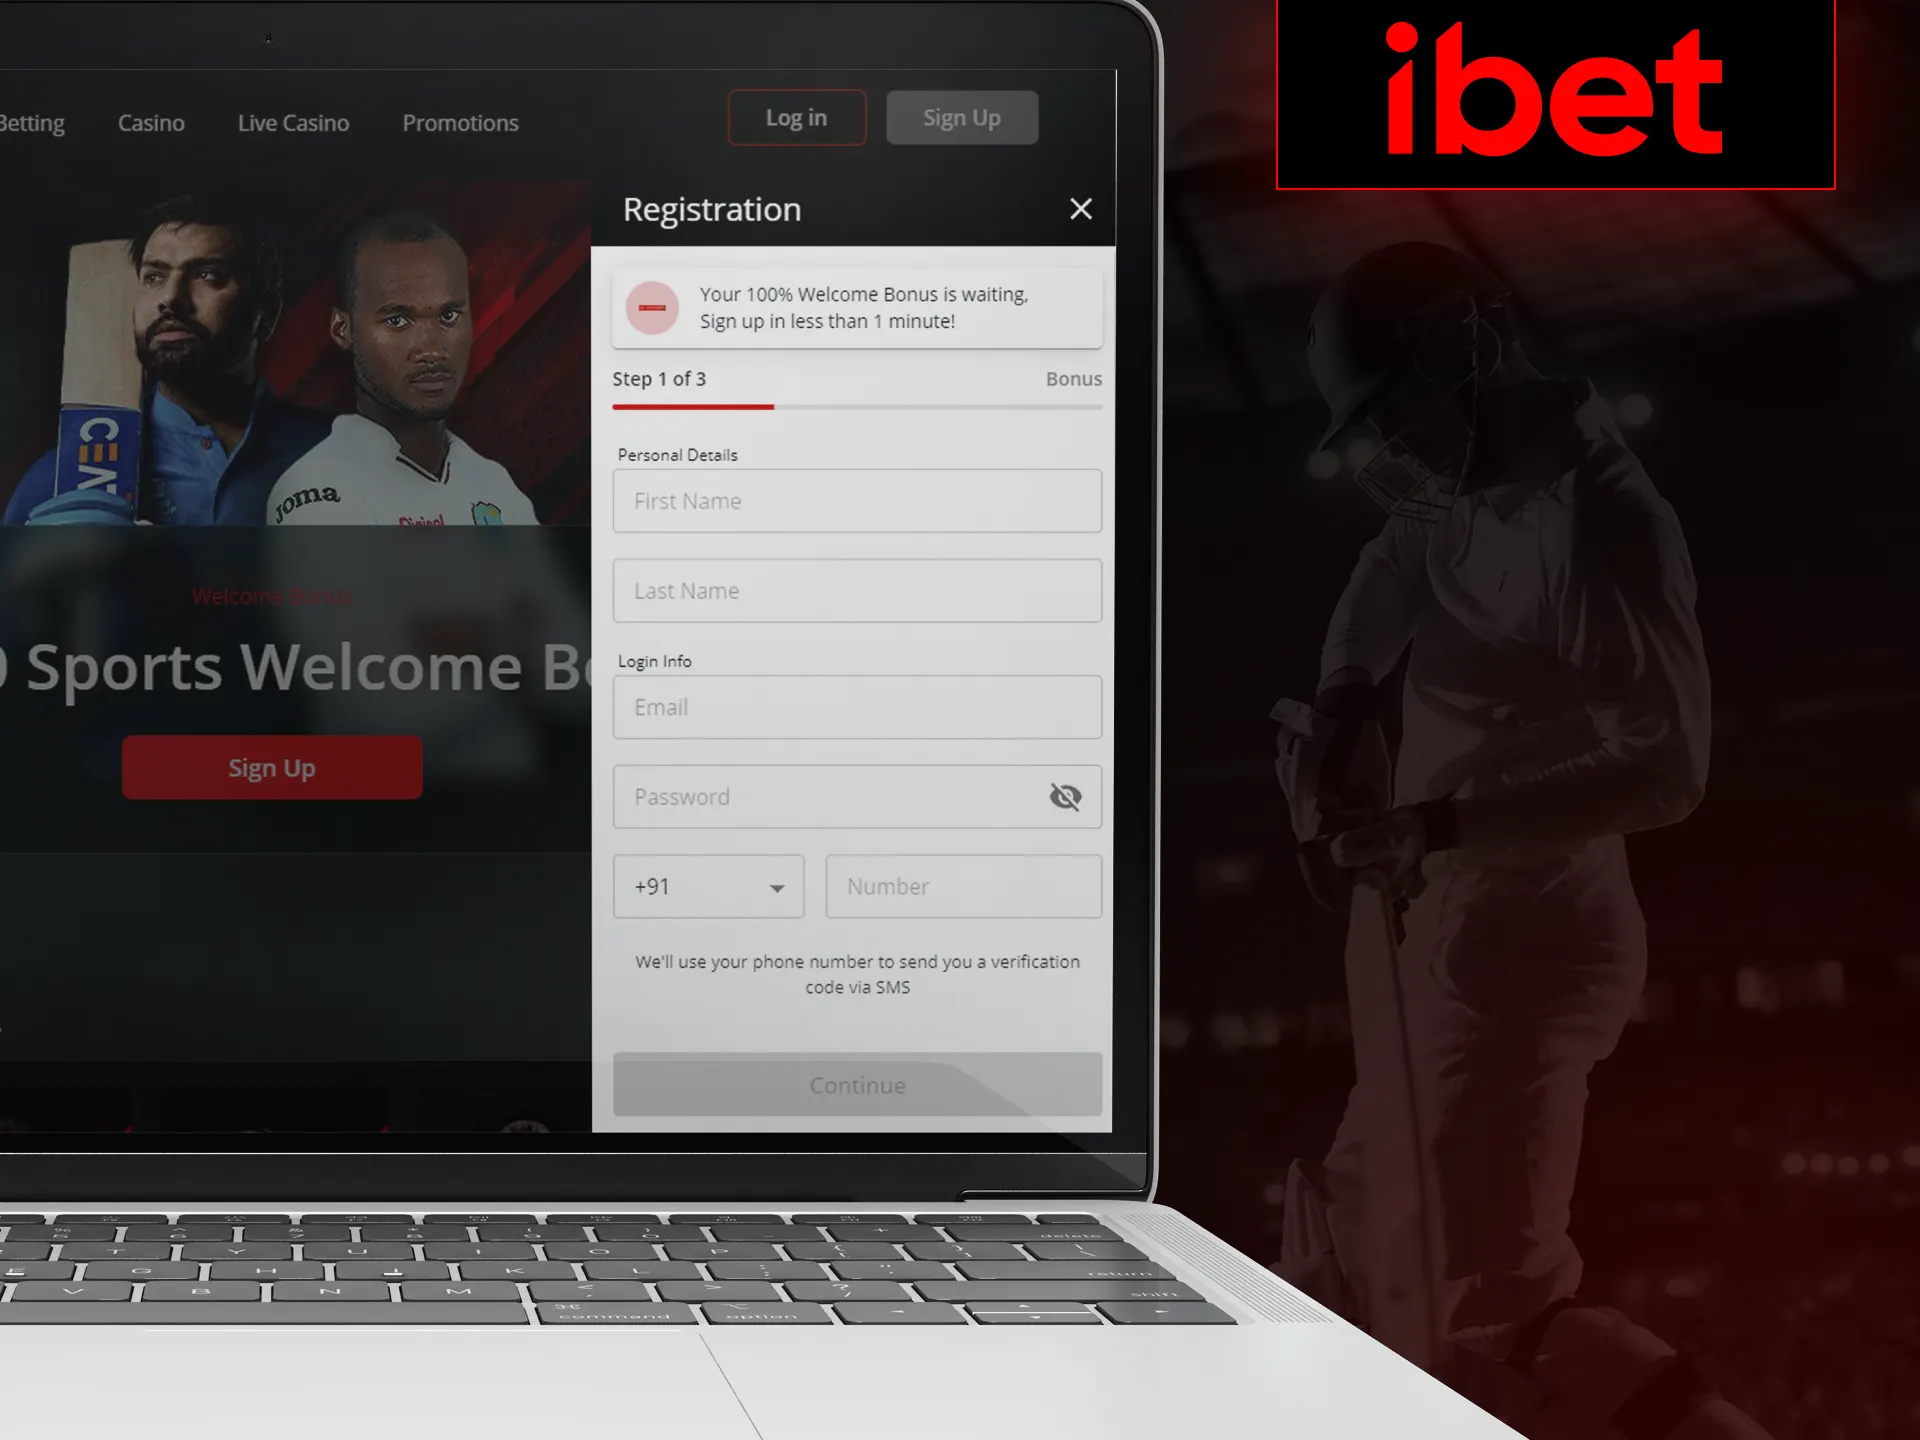 Register an account on the iBet website.